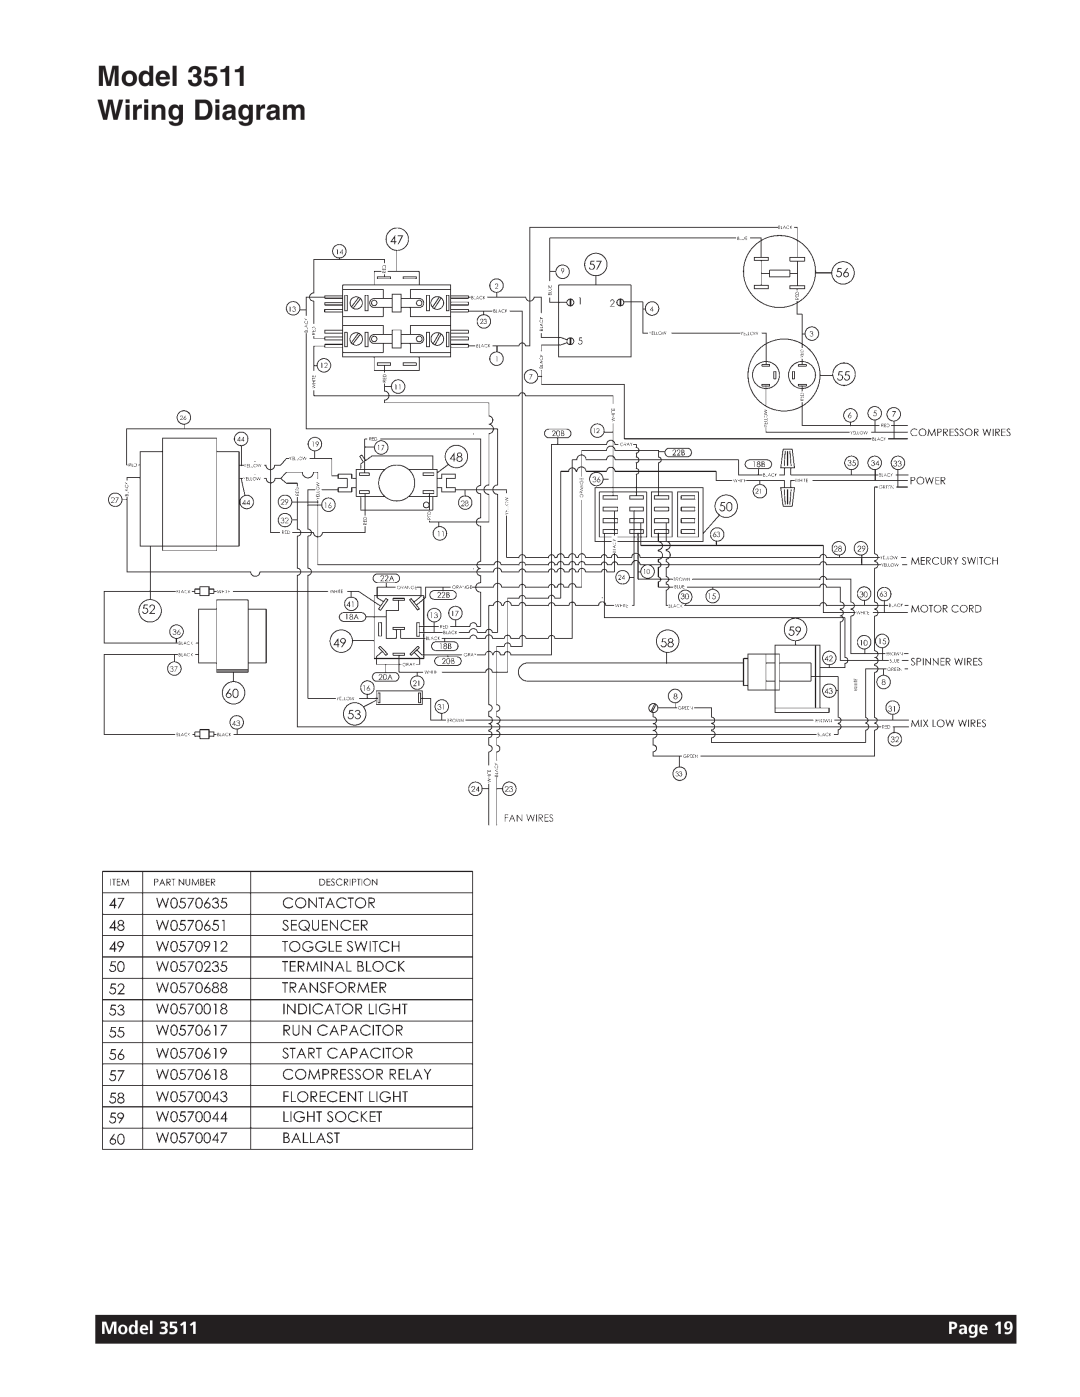 Grindmaster manual Model 3511 Wiring Diagram, Page 